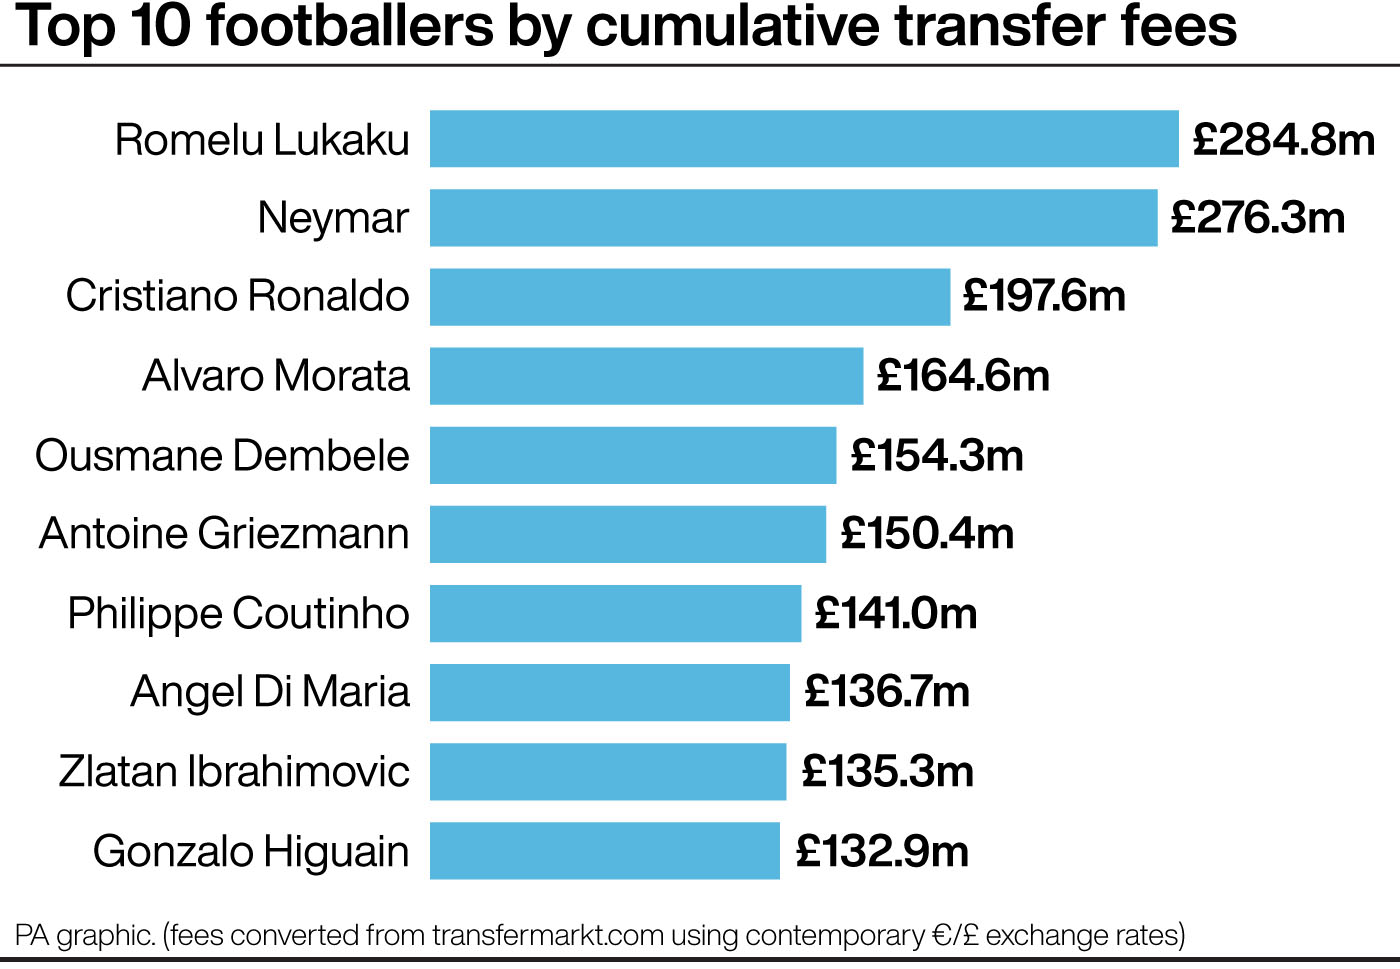 Top 10 footballers by cumulative transfer fees